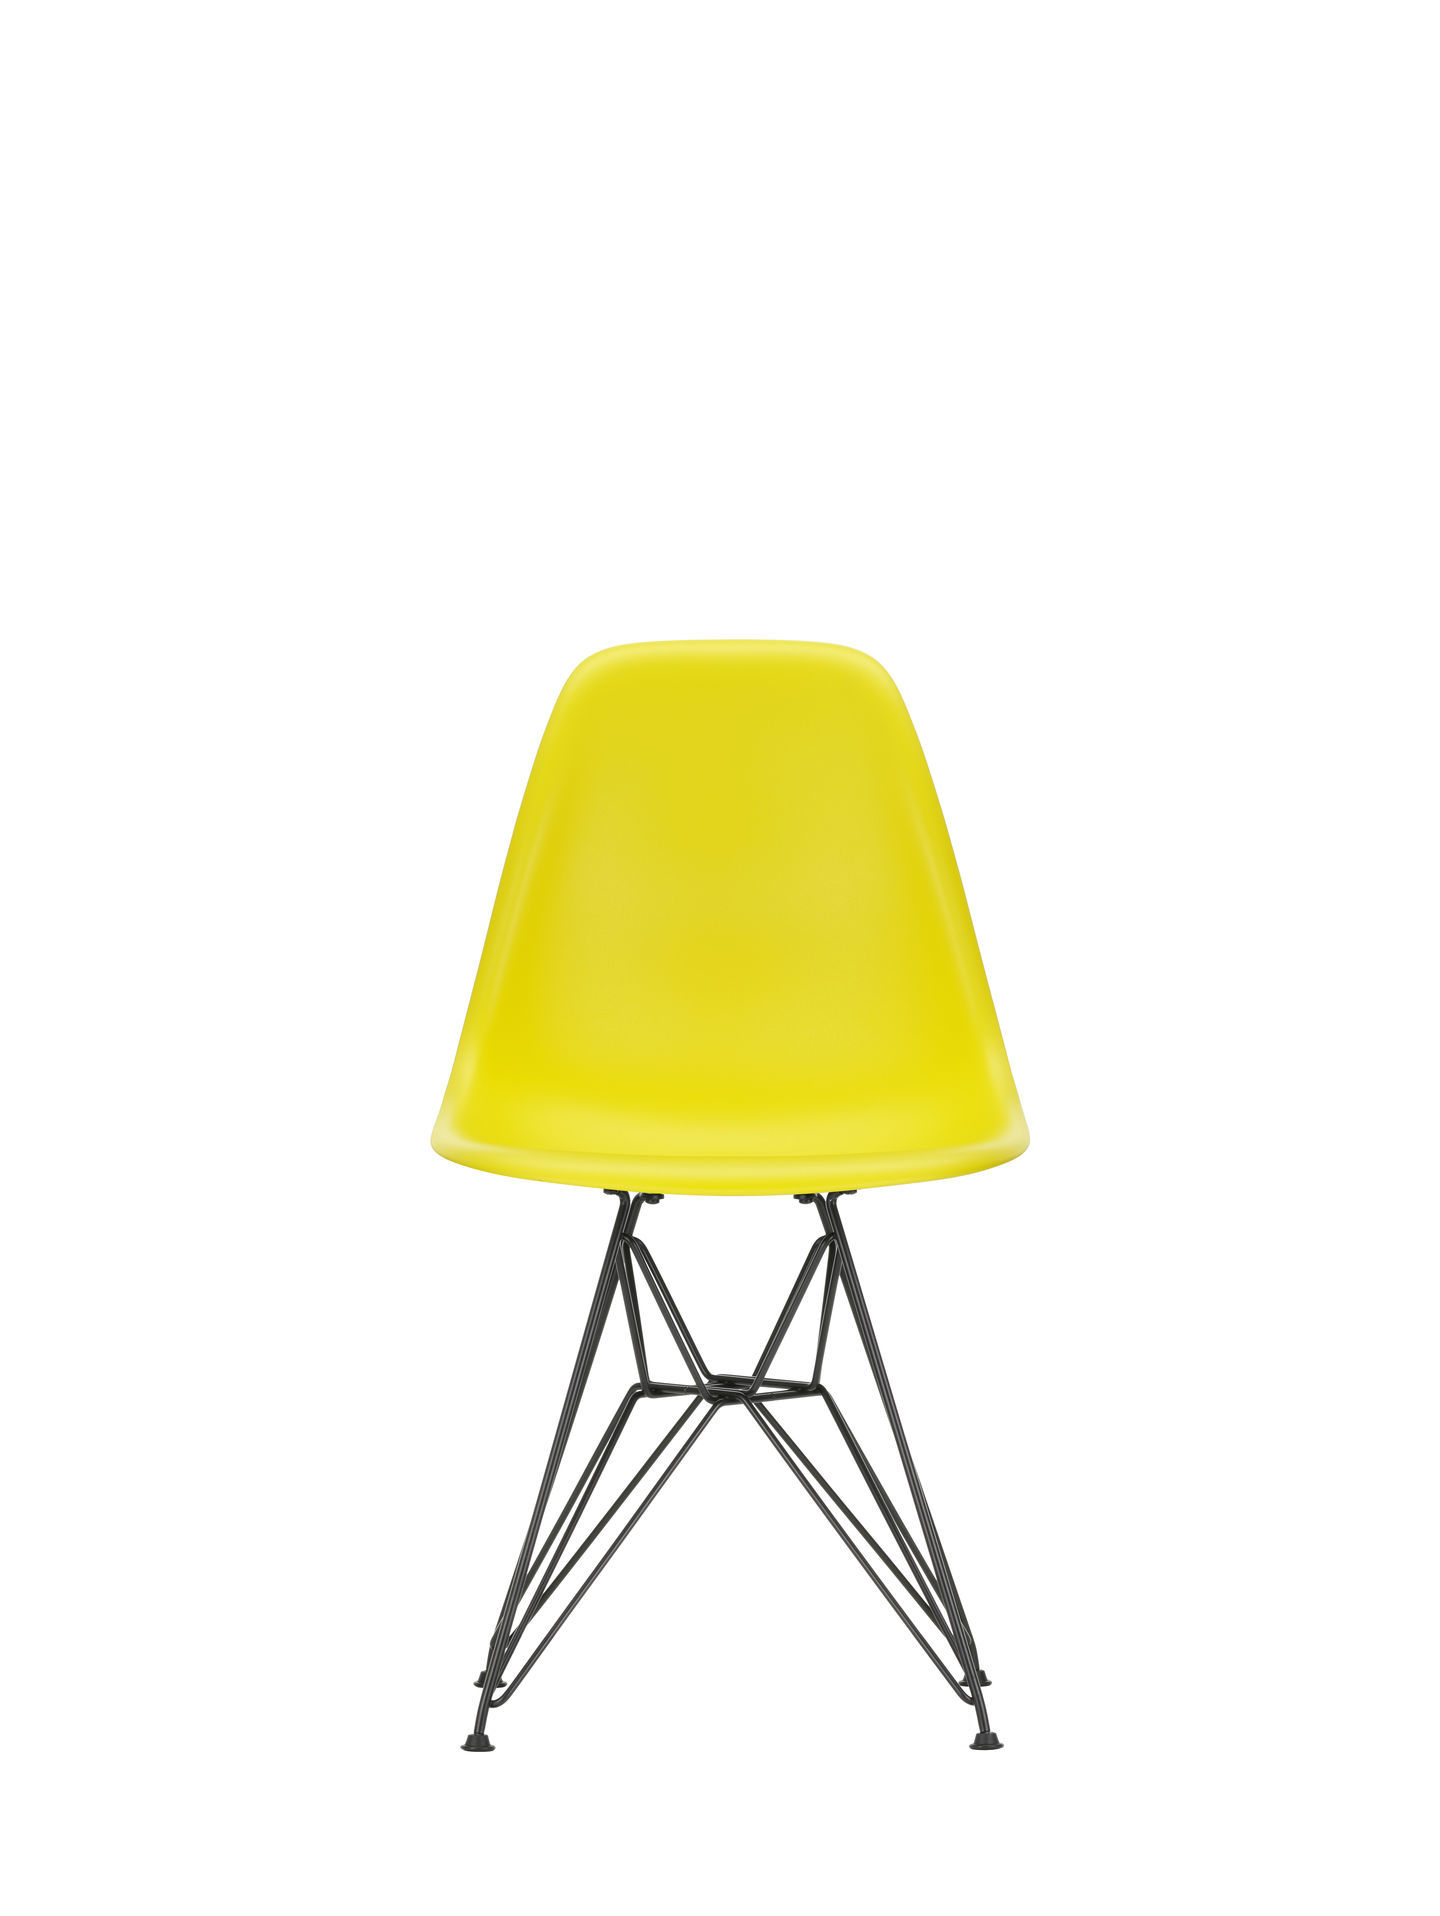 Eames Plastic Side Chair DSR Stuhl Vitra Schwarz-Granit grau